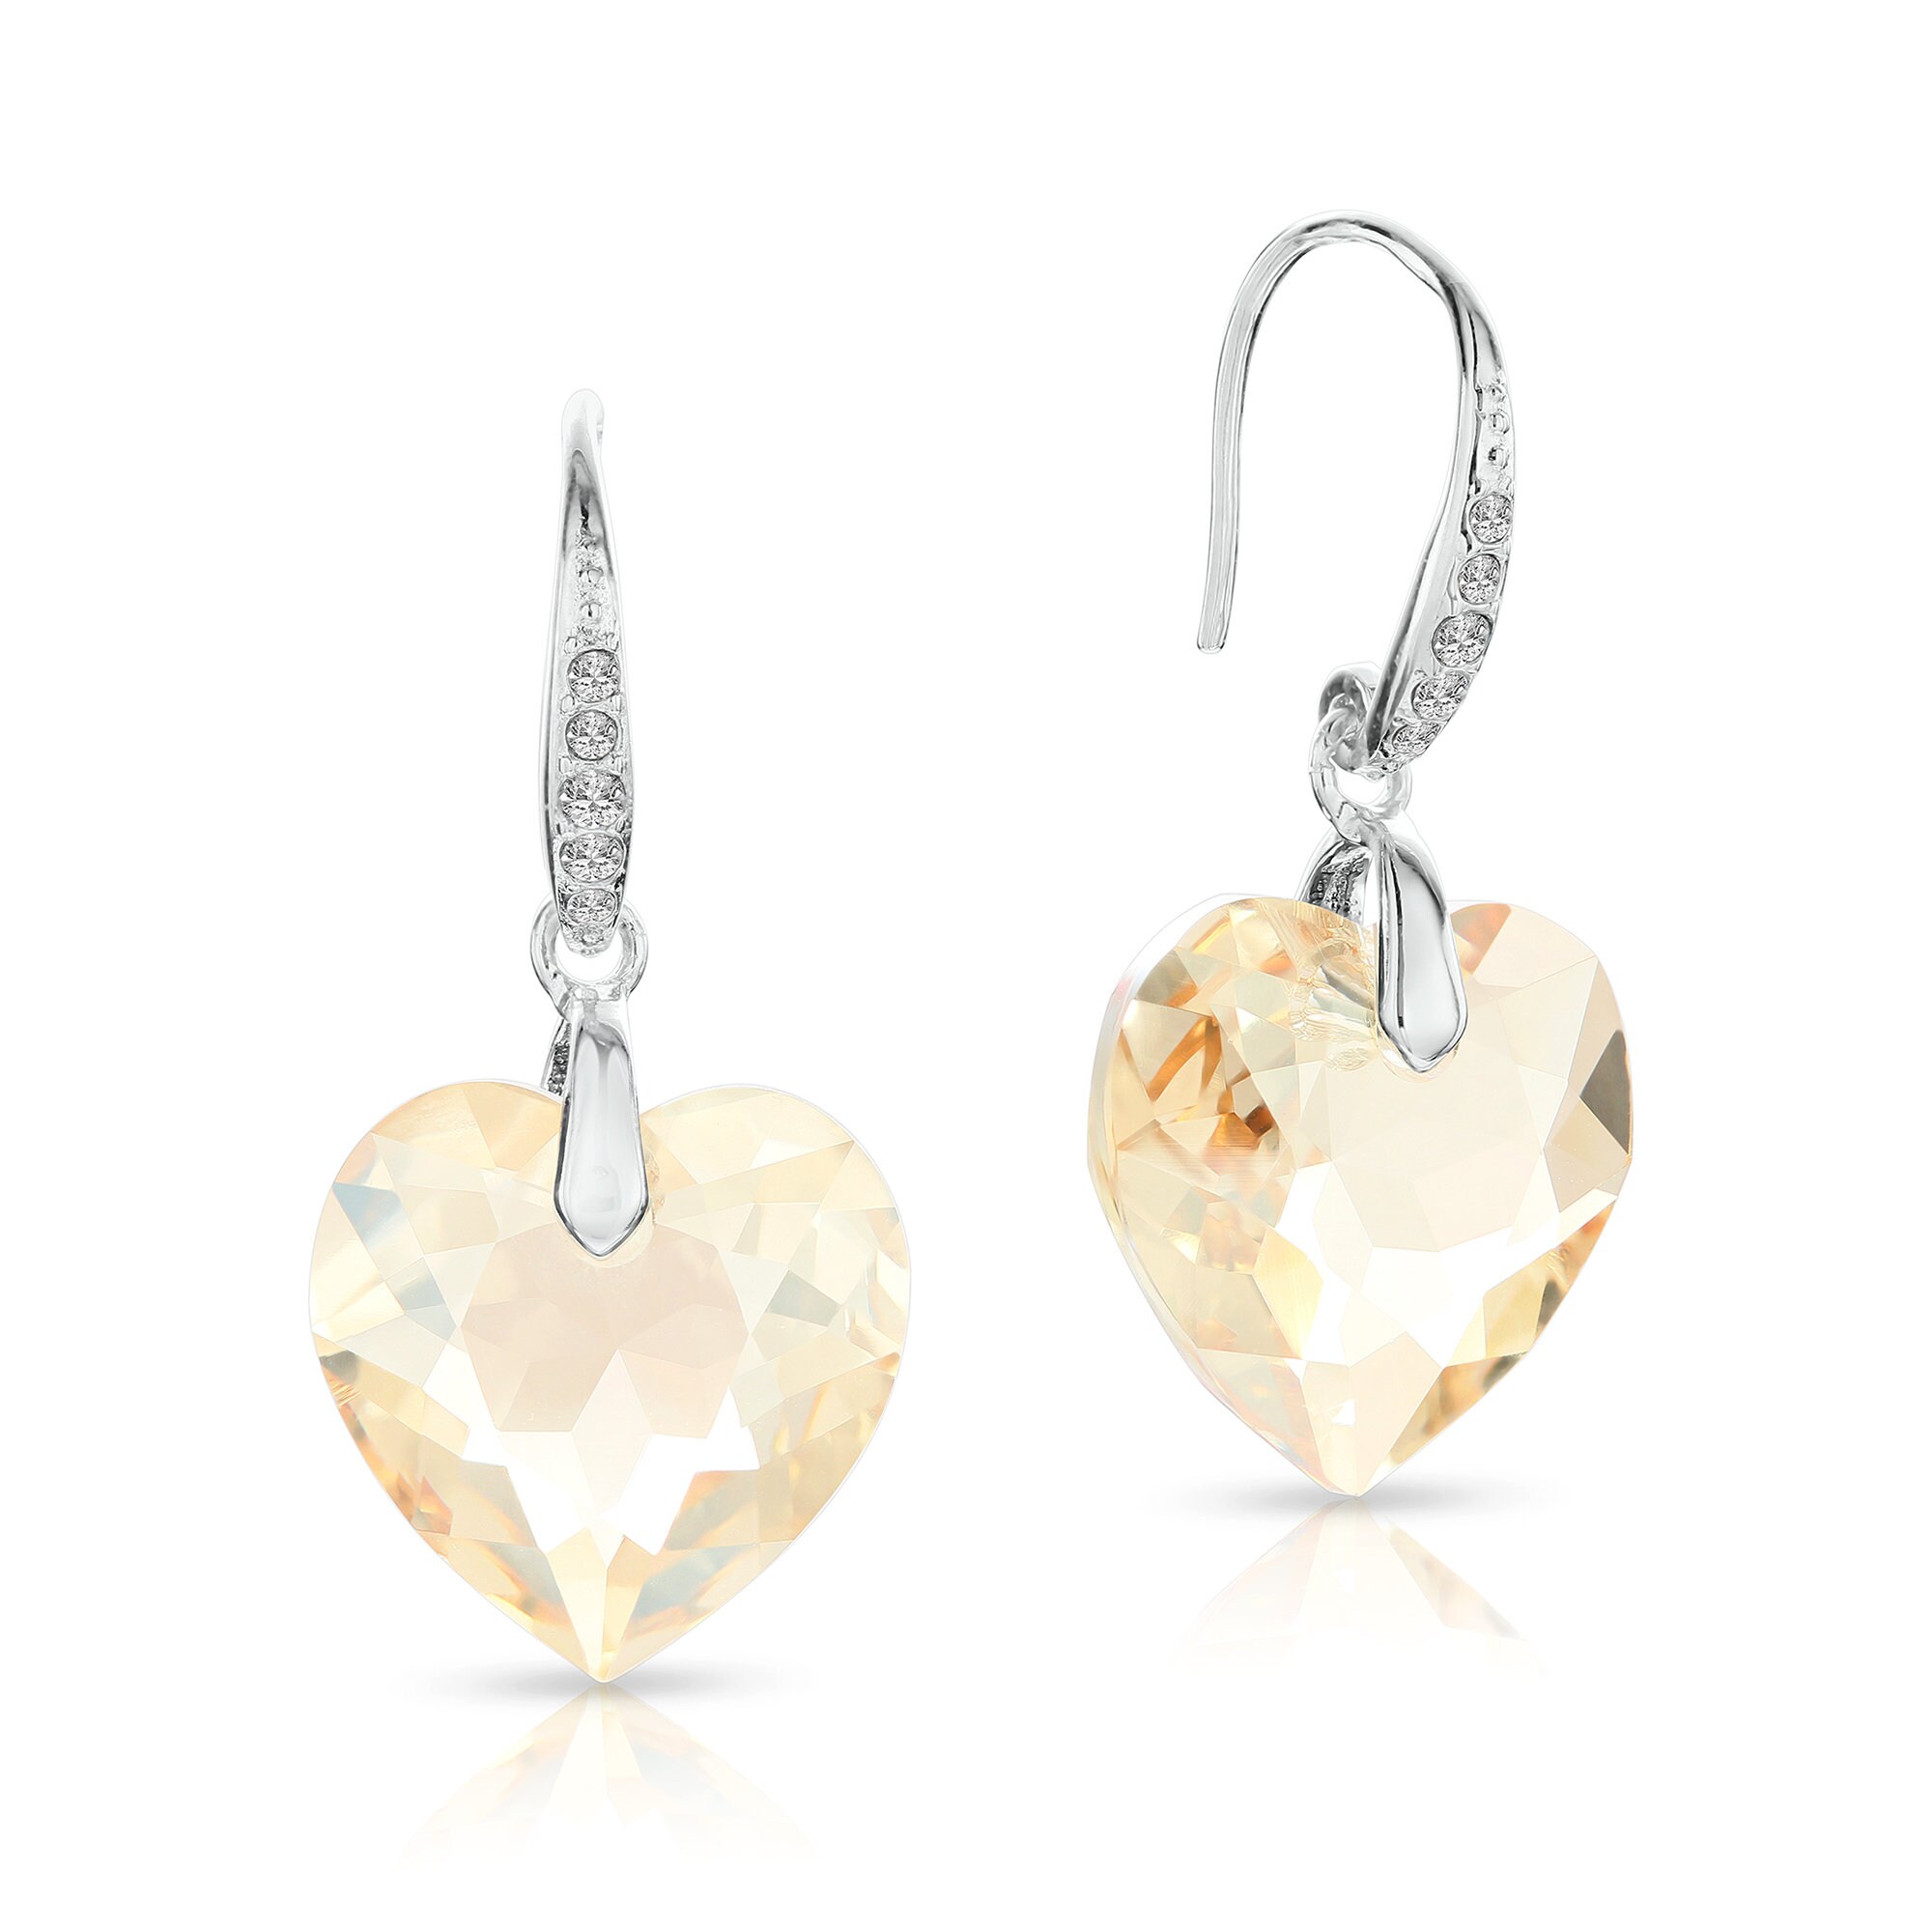 Swarovski Sparkly Crystal Heart Shaped Earrings Drop Heart pic